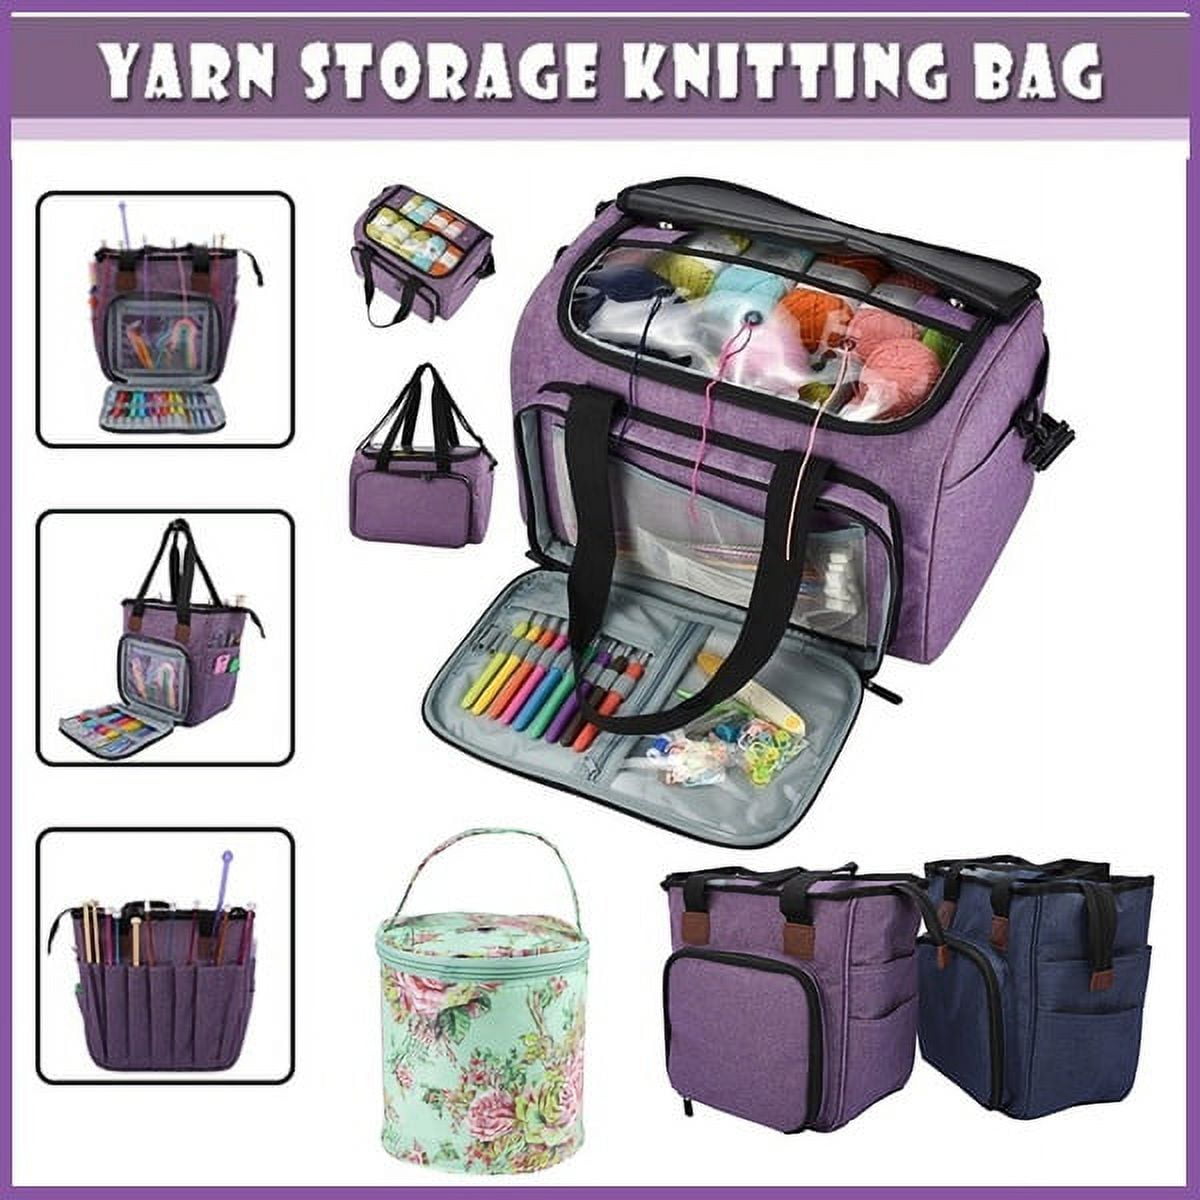 DOACT Knitting Bag Yarn Storage Knitting Tote Bag Wood Handle Yarn